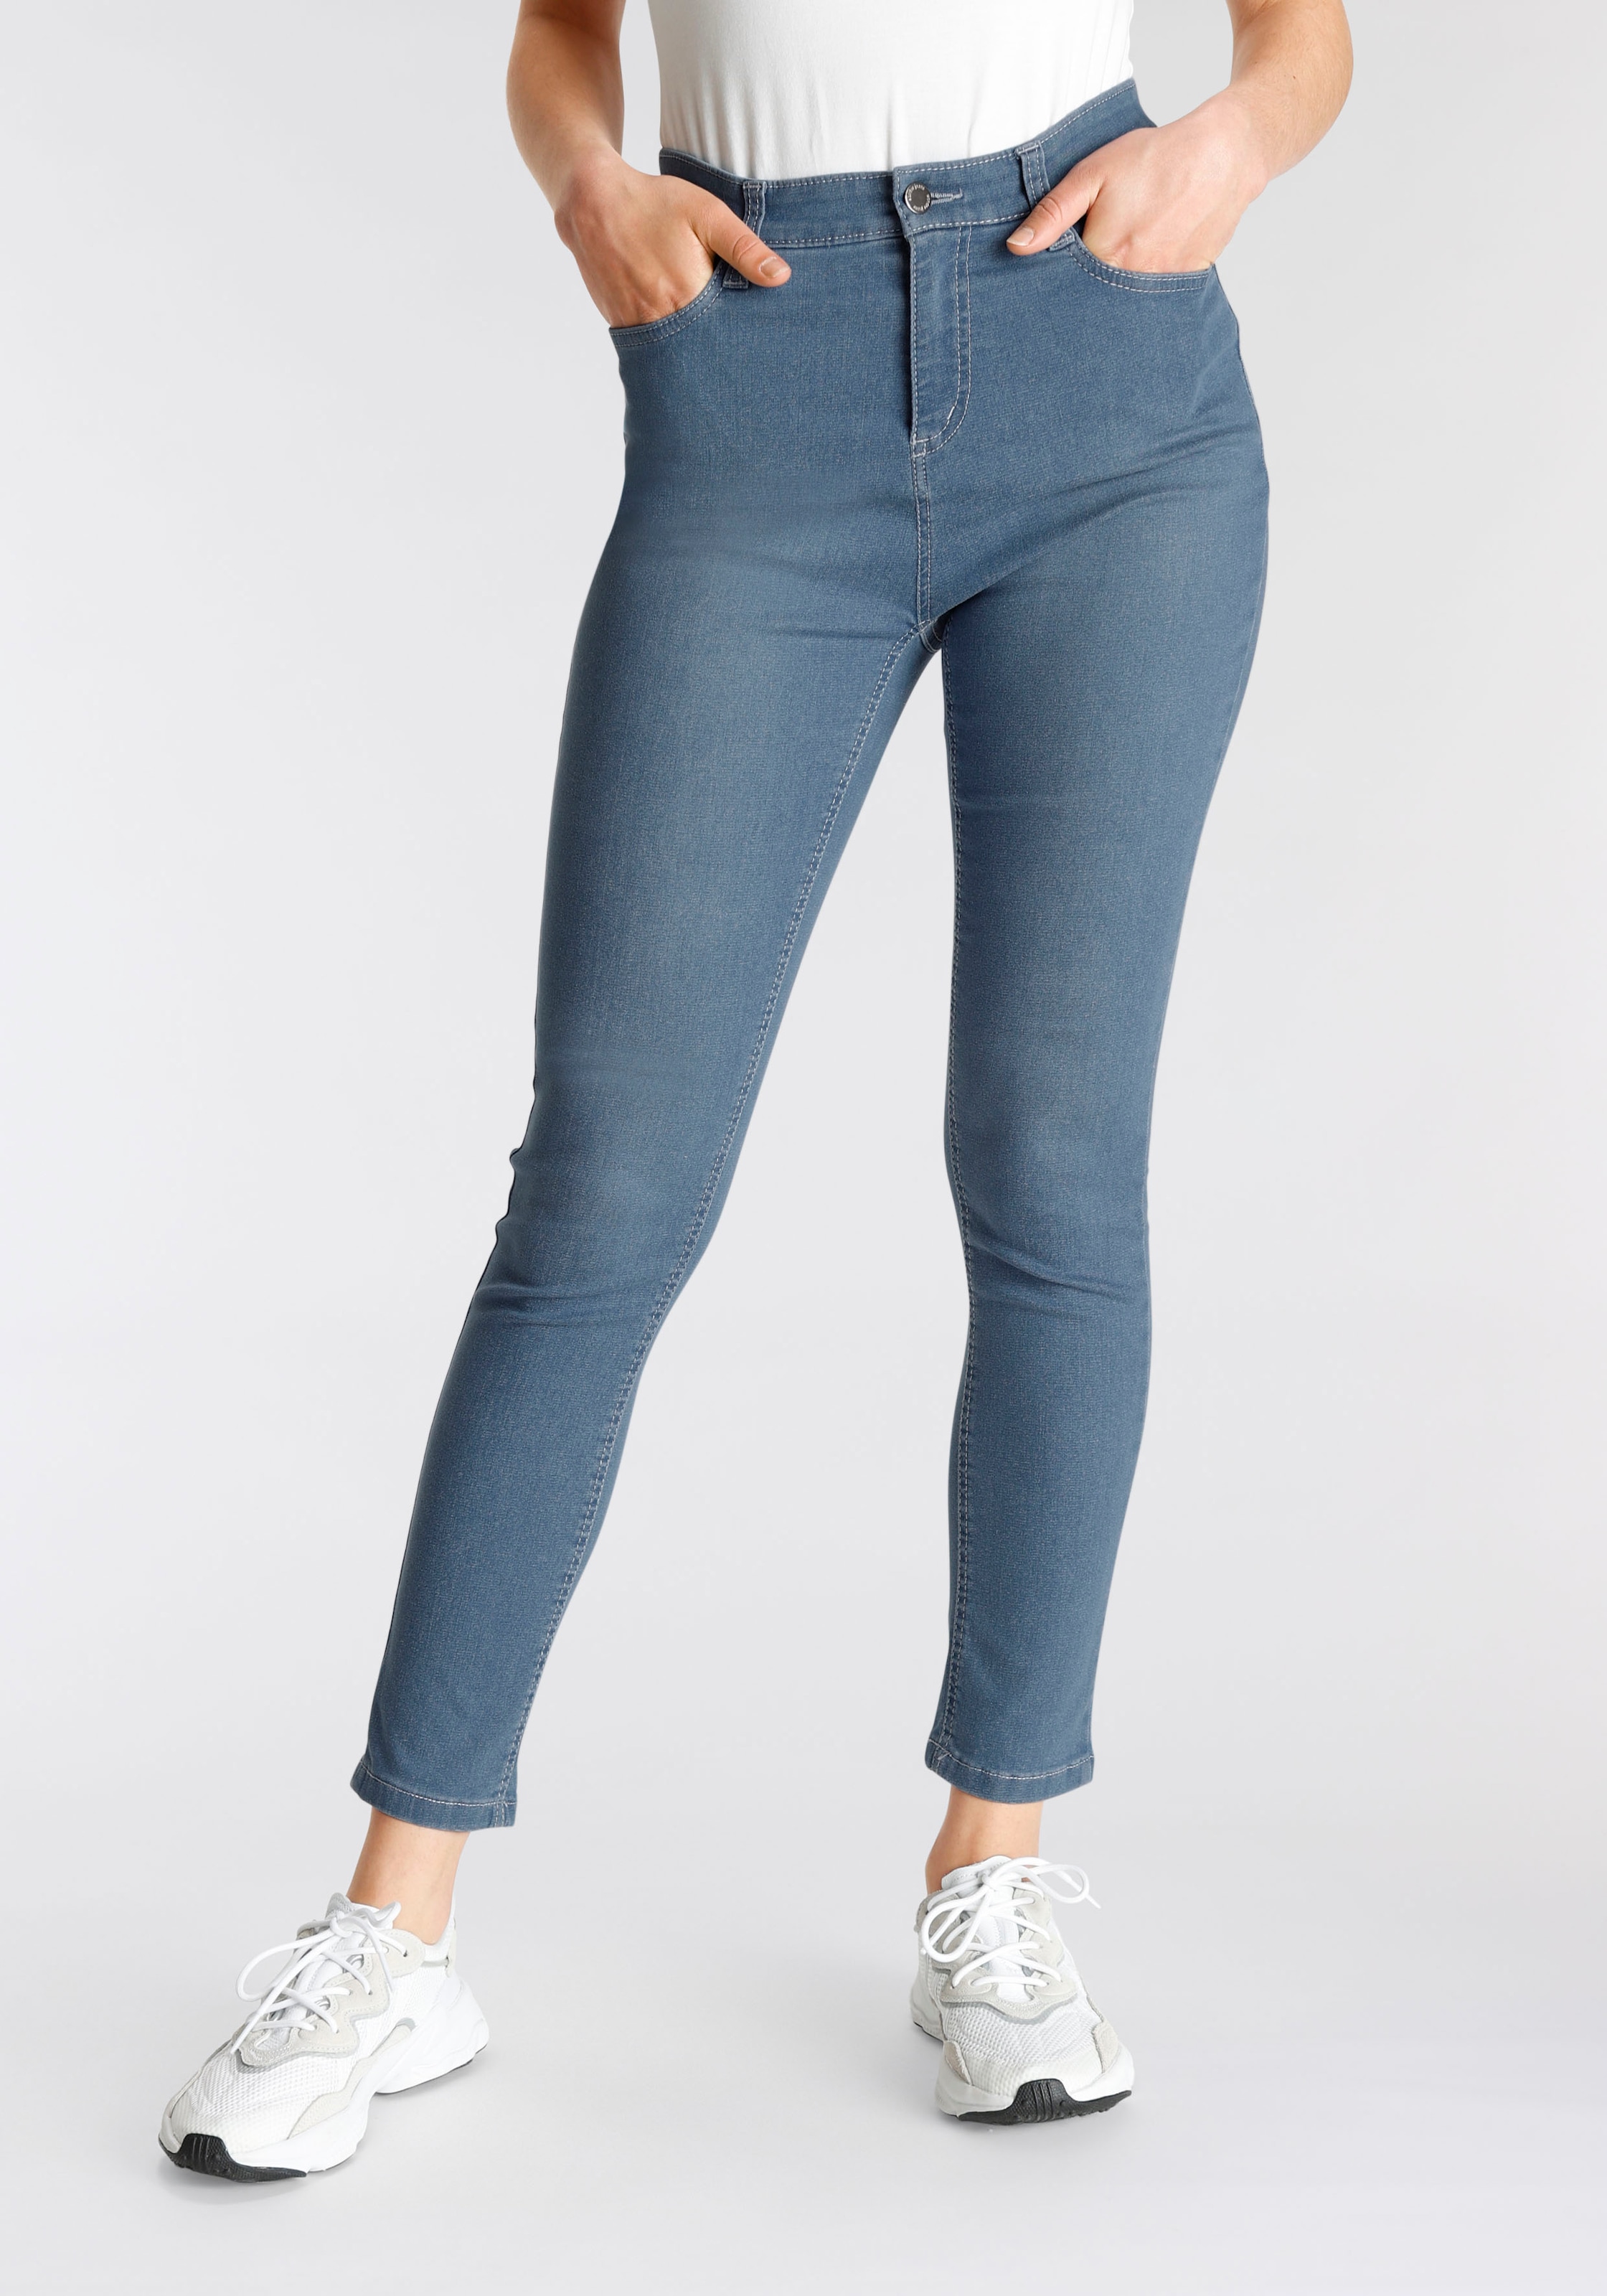 OTTOversand wonderjeans bei High-waist-Jeans